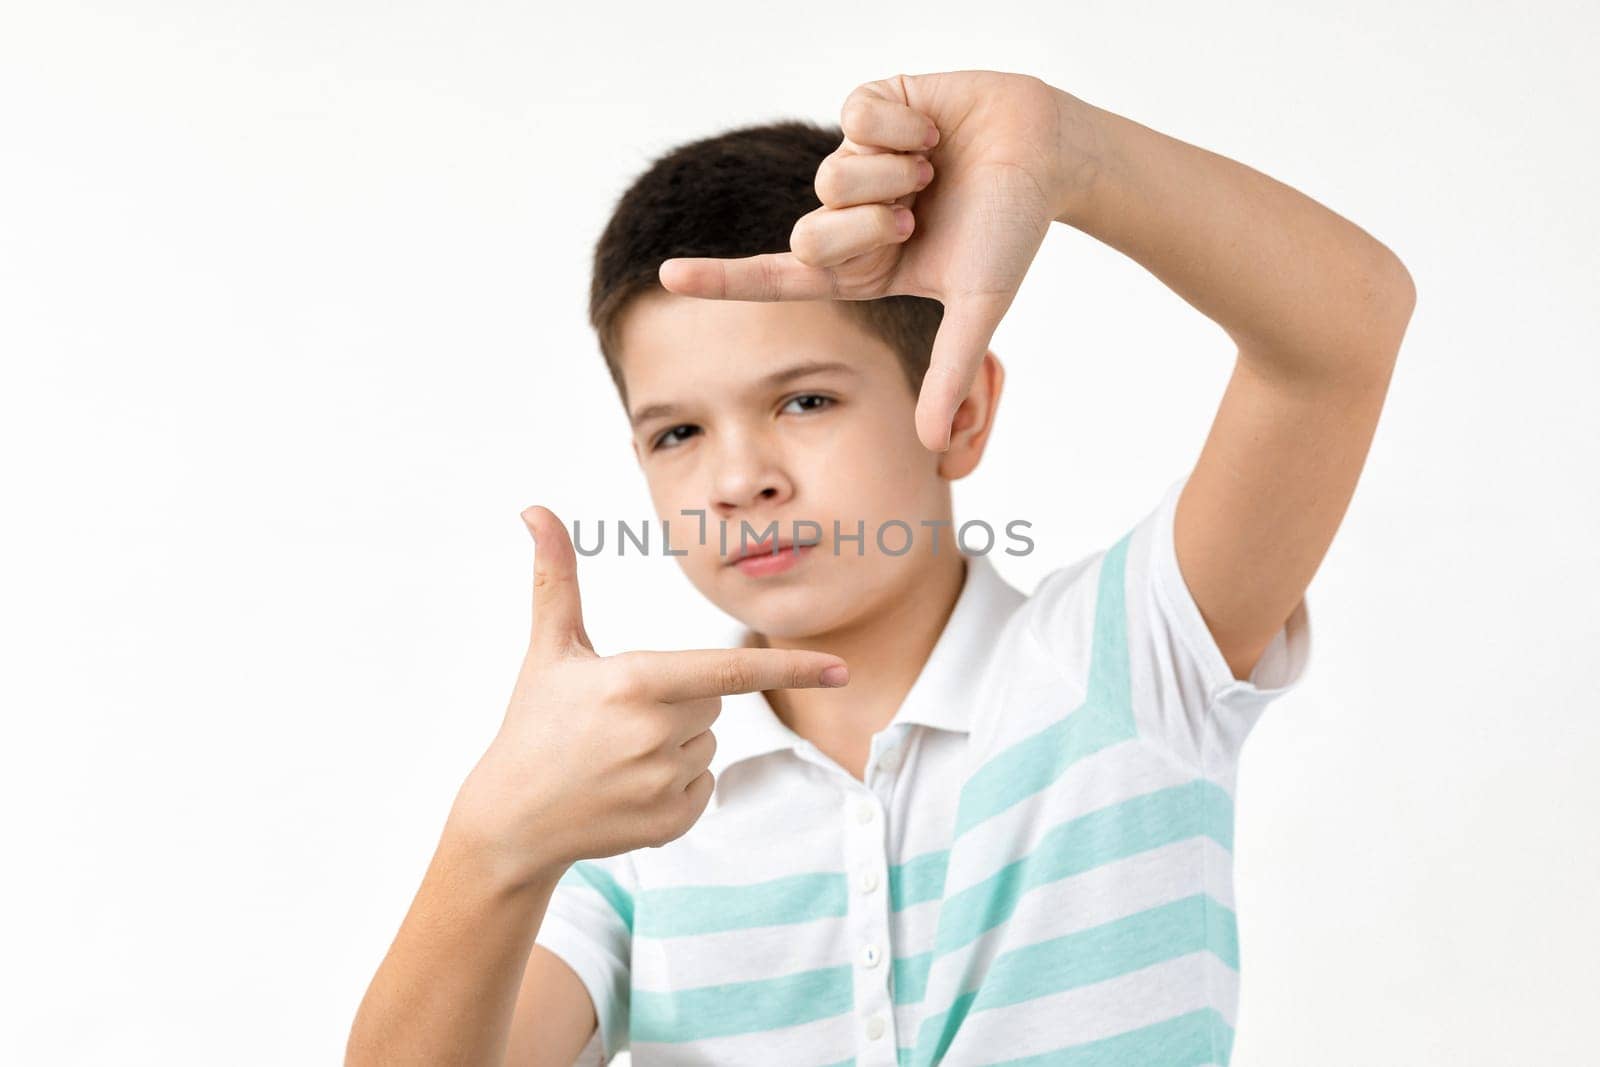 little child boy in striped t-shirt making hands photo frame gesture by erstudio